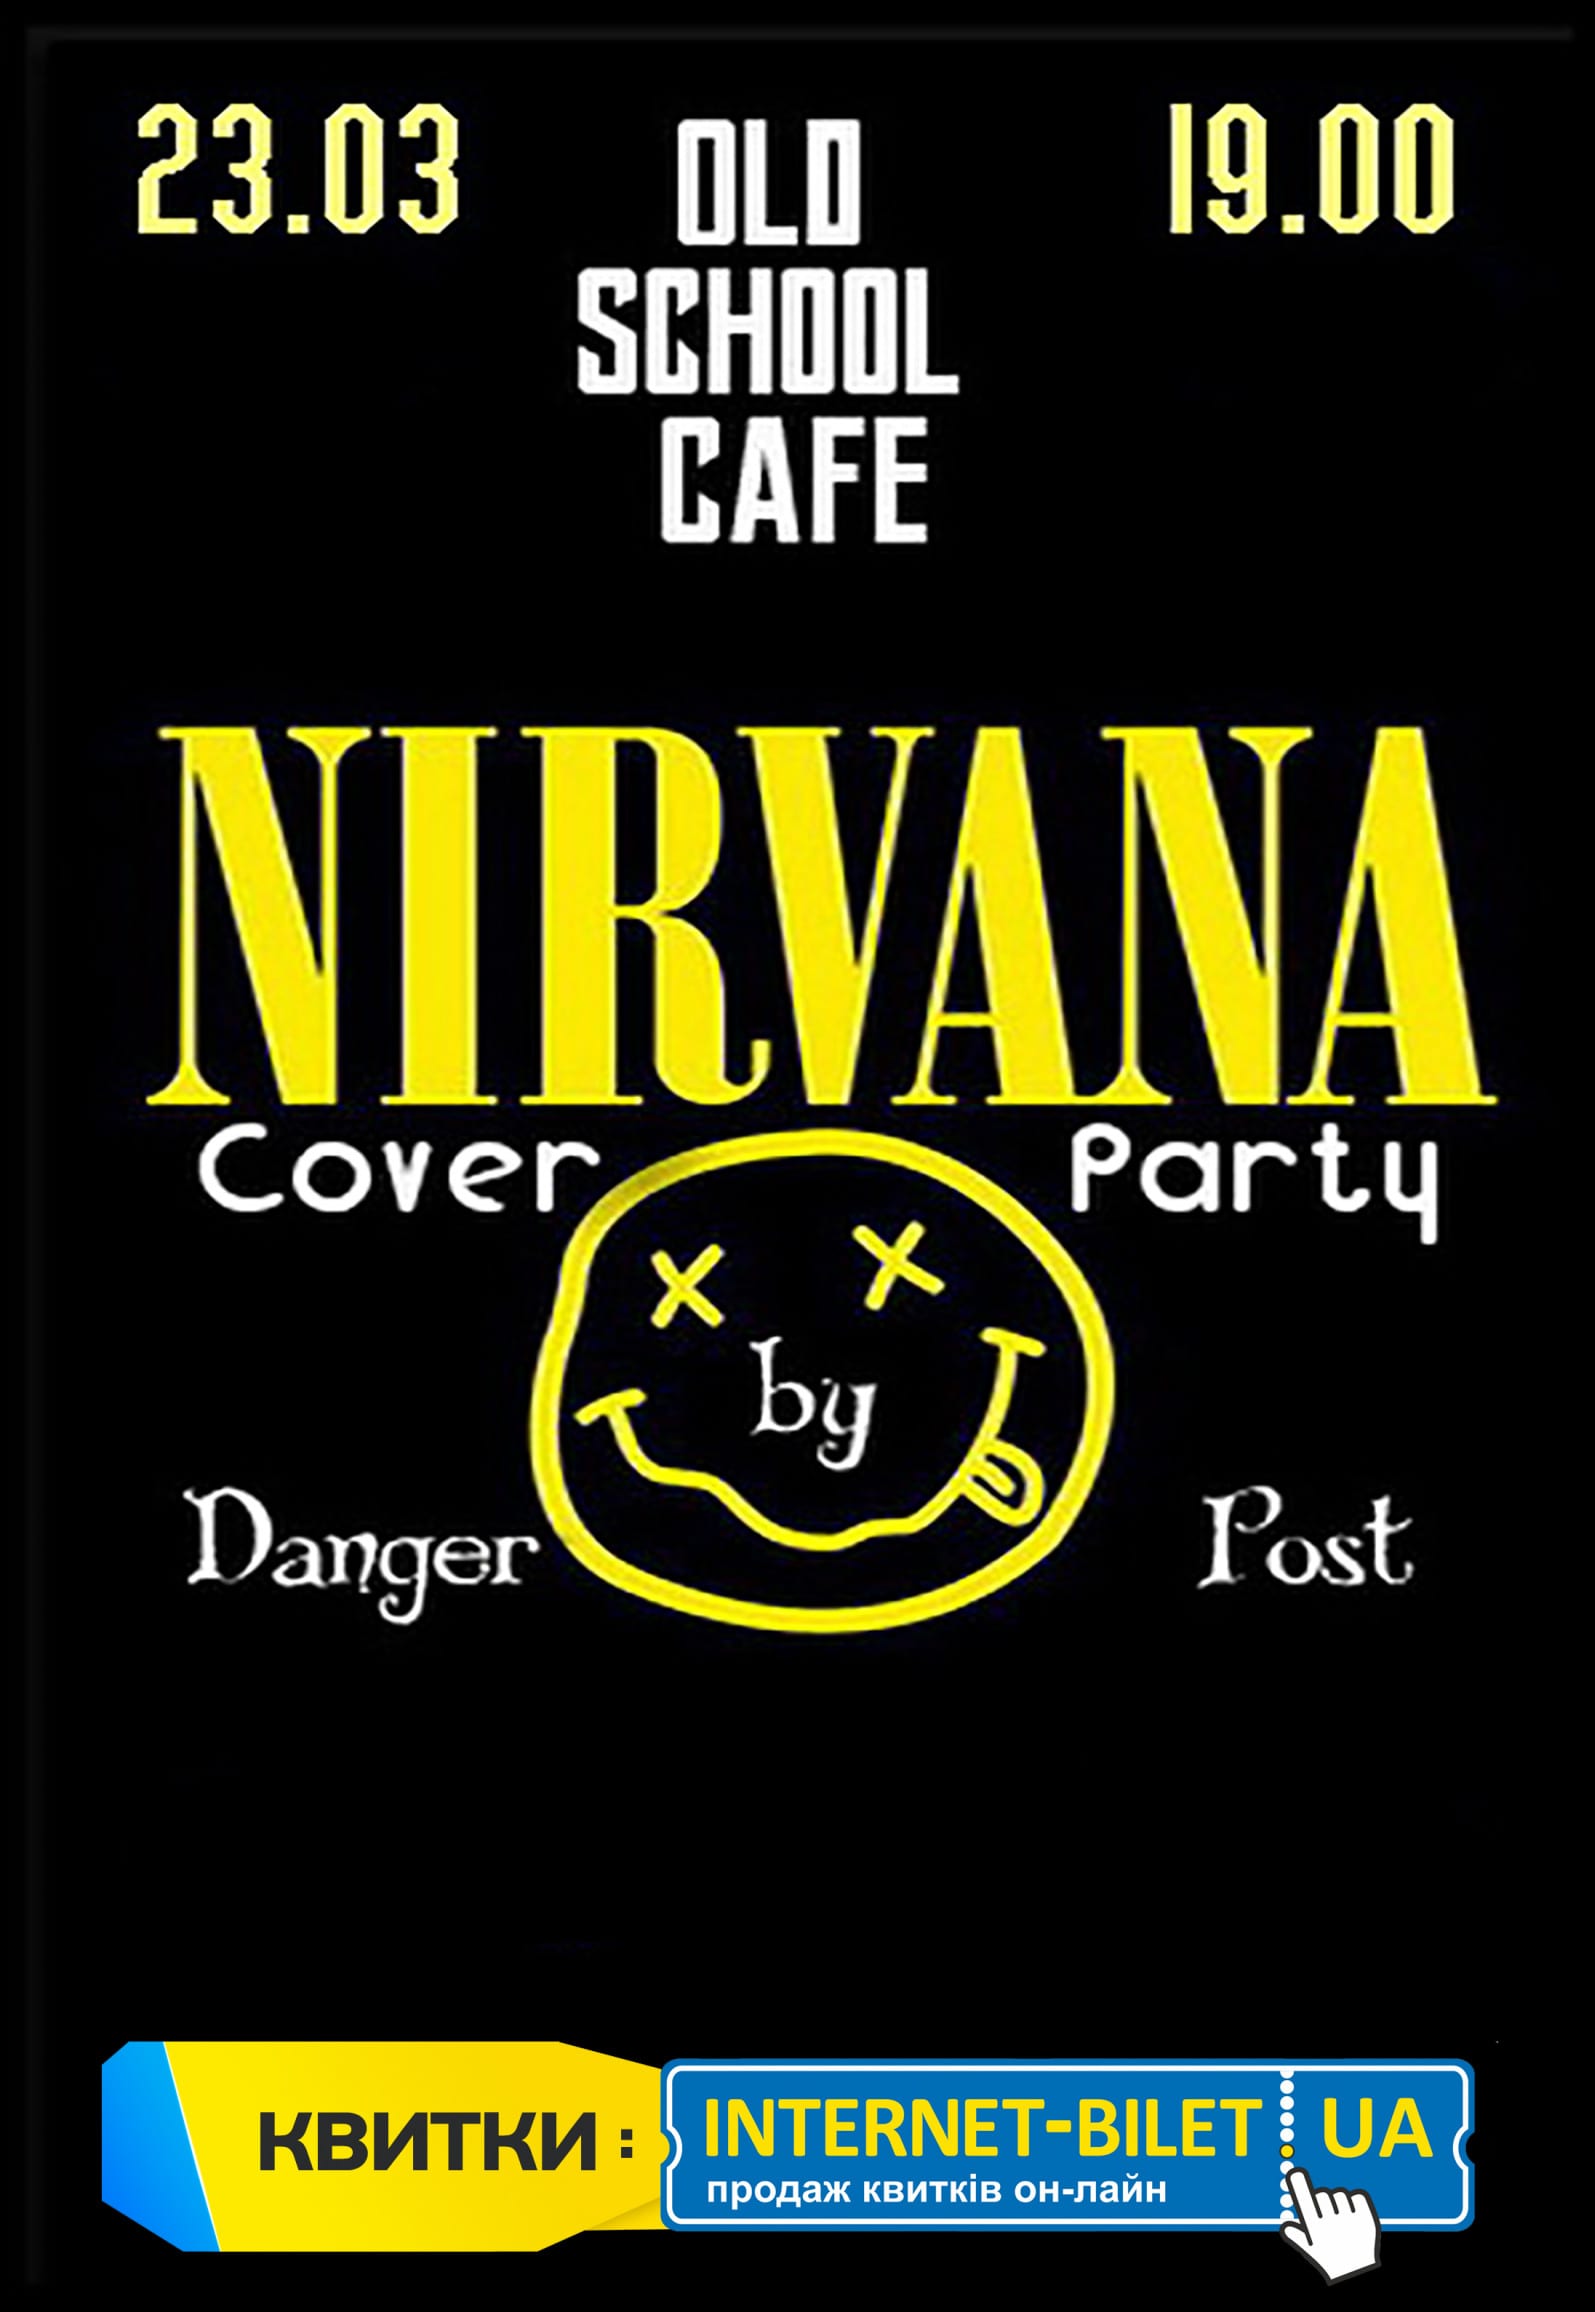 Nirvana cover party Днепр, 23.03.2019, цена, купить билеты. Афиша Днепра